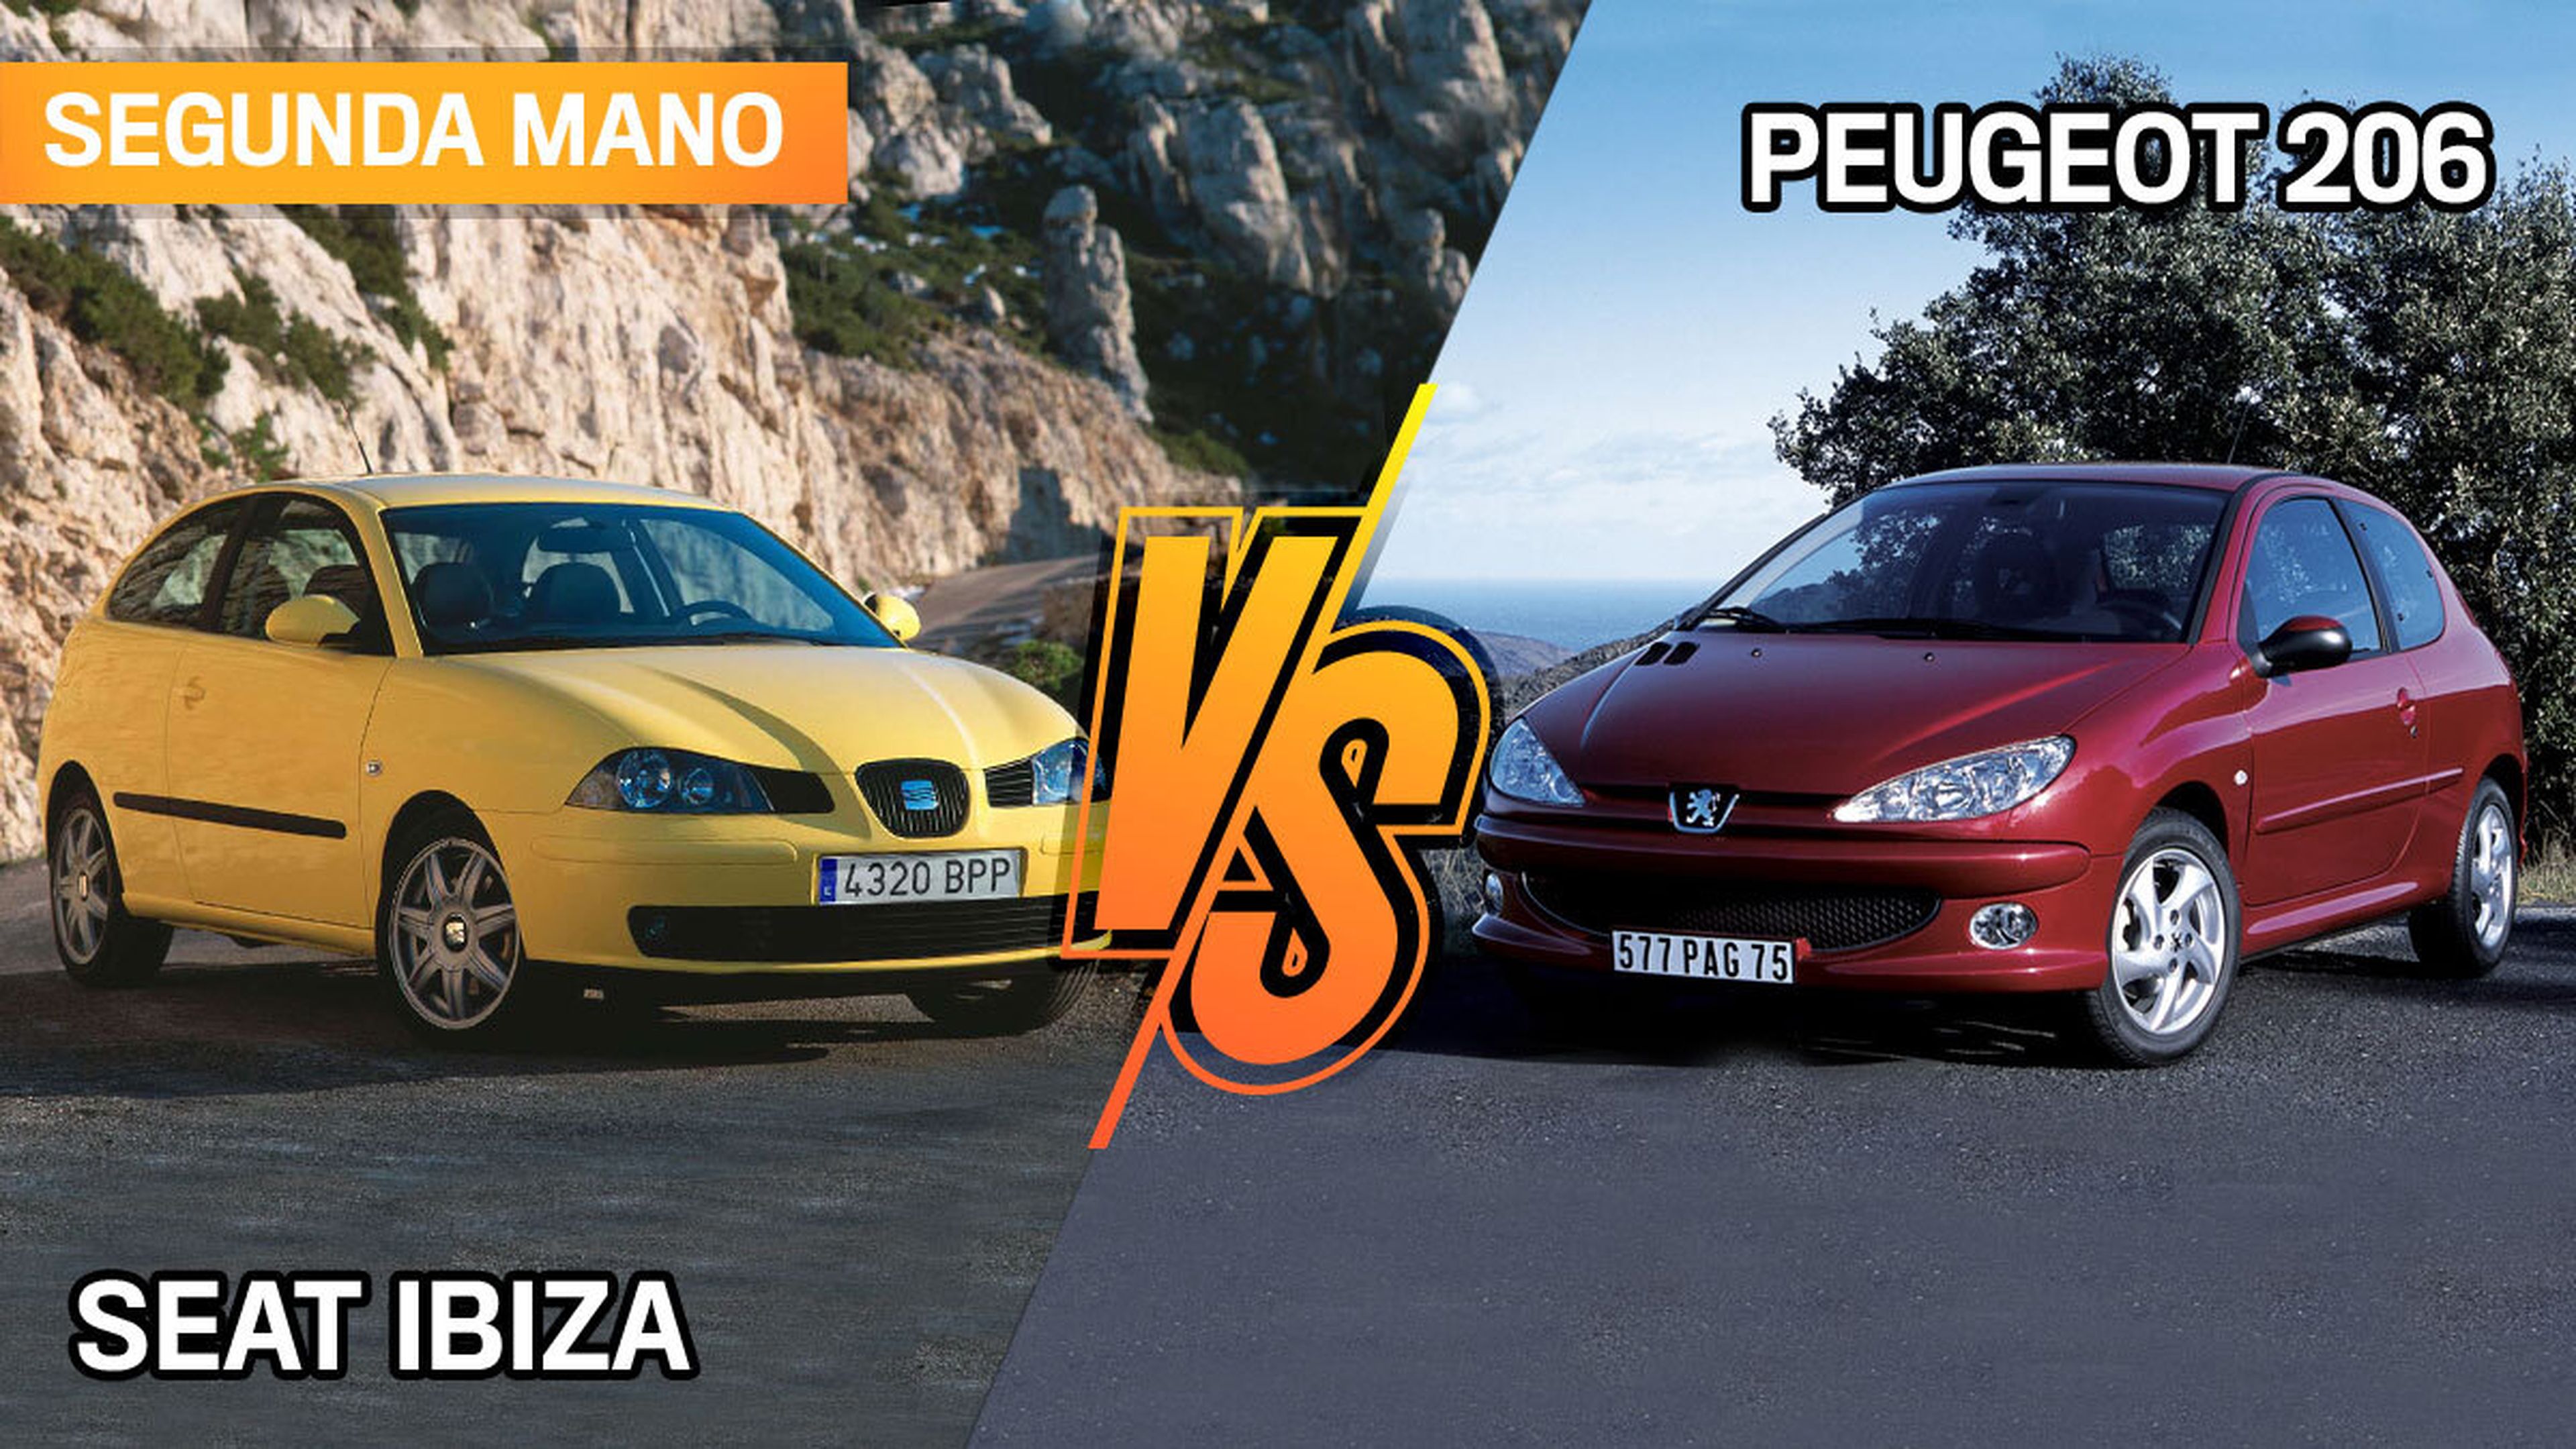 Segunda mano: ¿Peugeot 206 o Seat Ibiza?